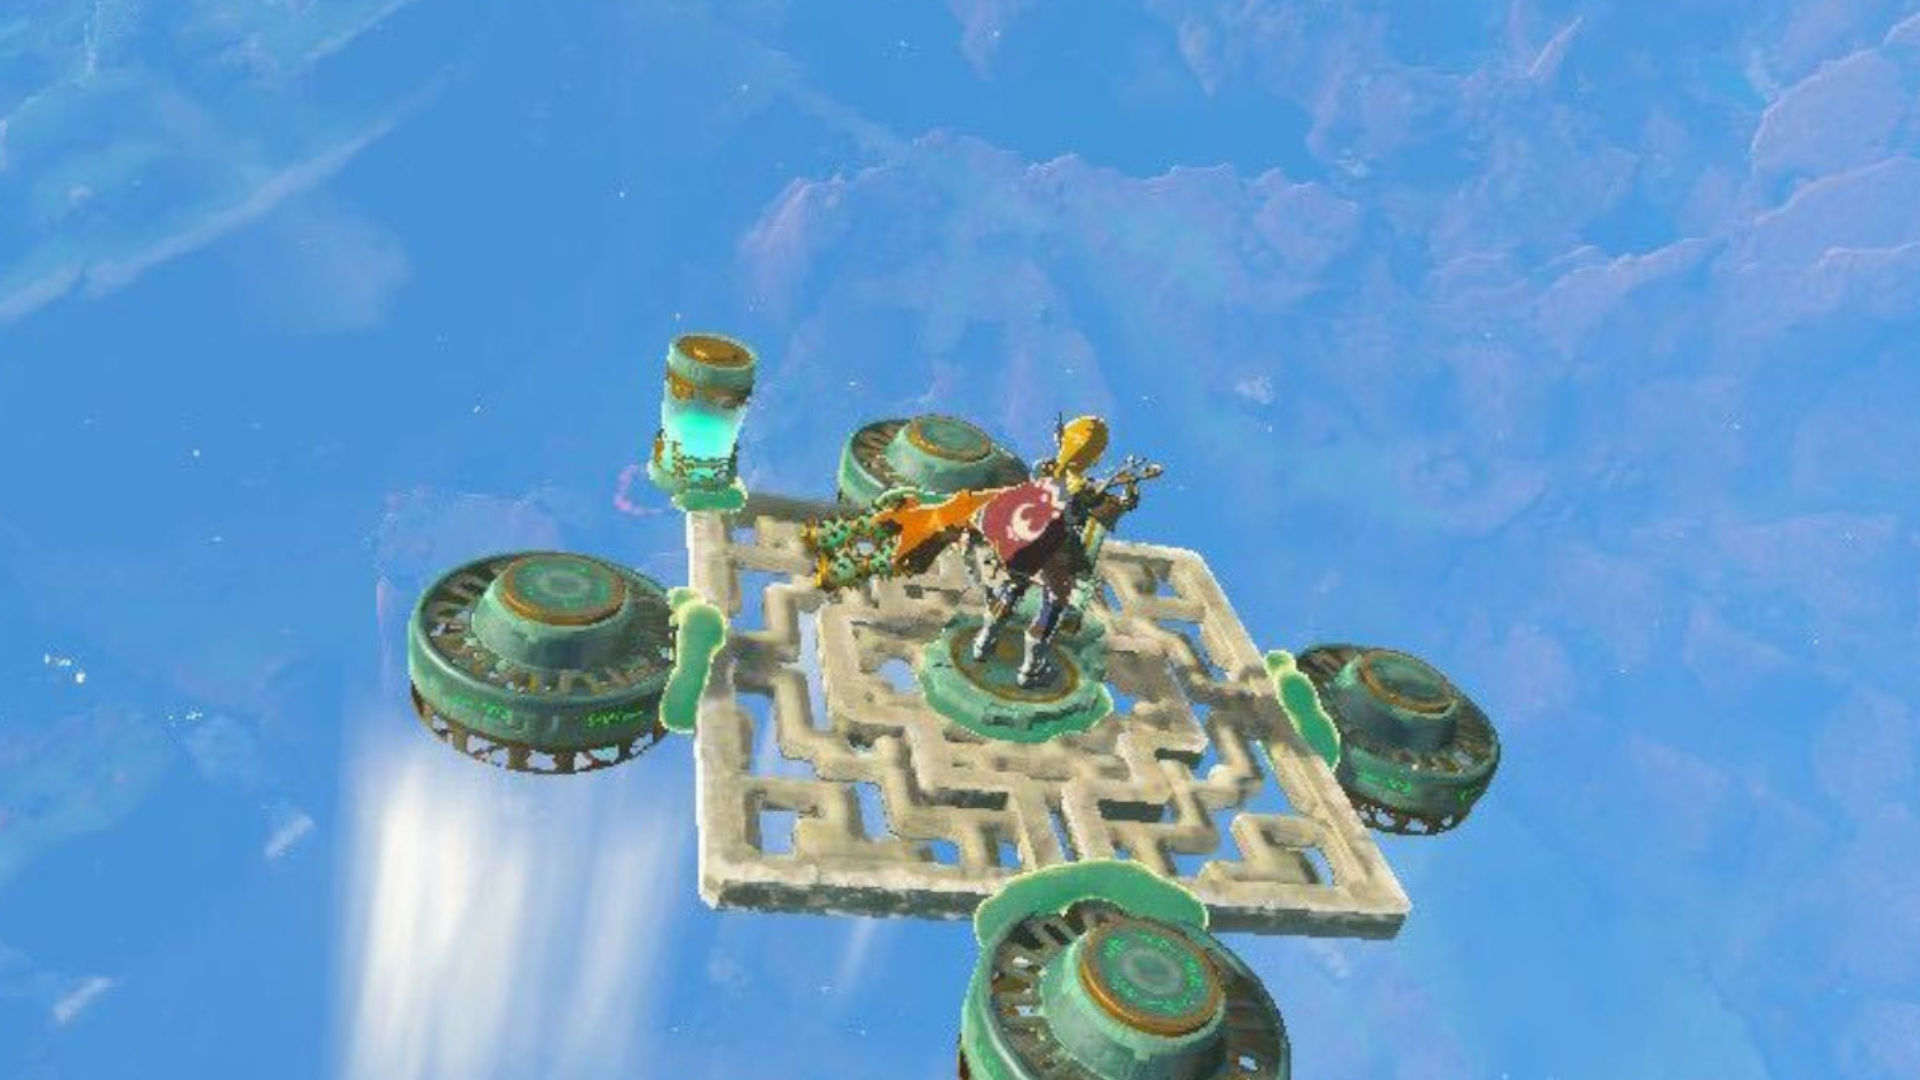 Custom screenshot of Link flying over Hyrule using one of the Zelda: Tears of the Kingdom vehicles he has created